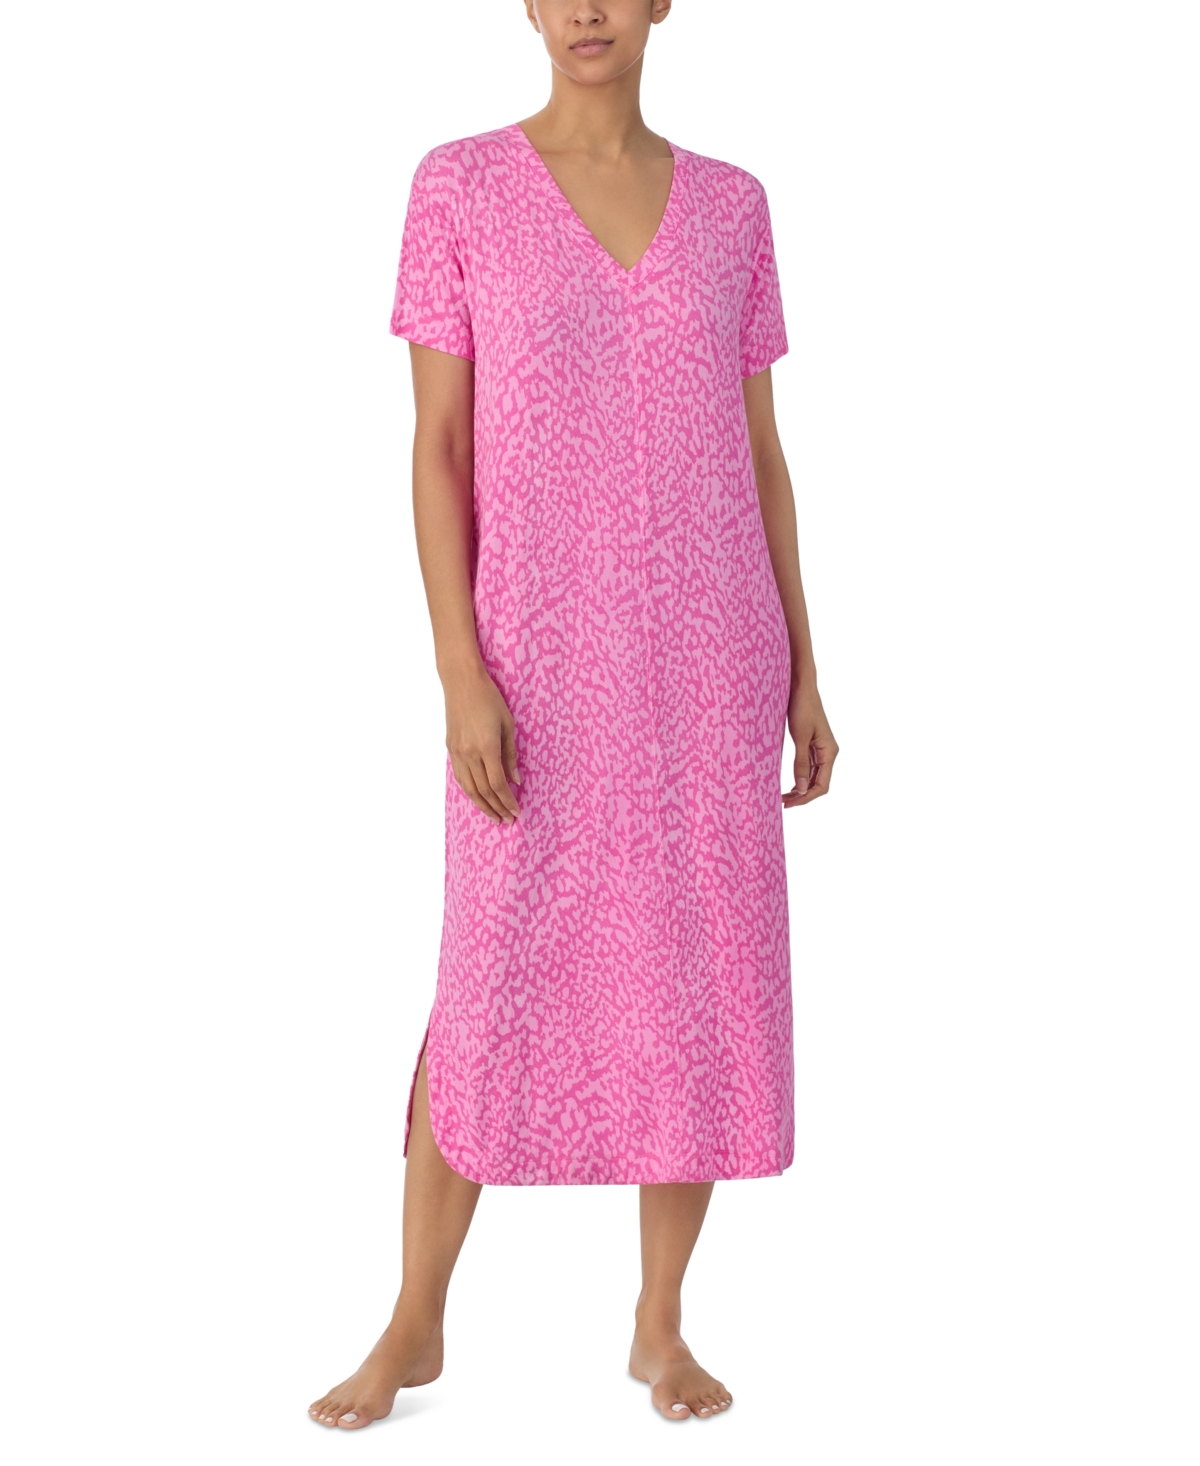 Women's Printed Short-Sleeve Nightgown - Pink Print